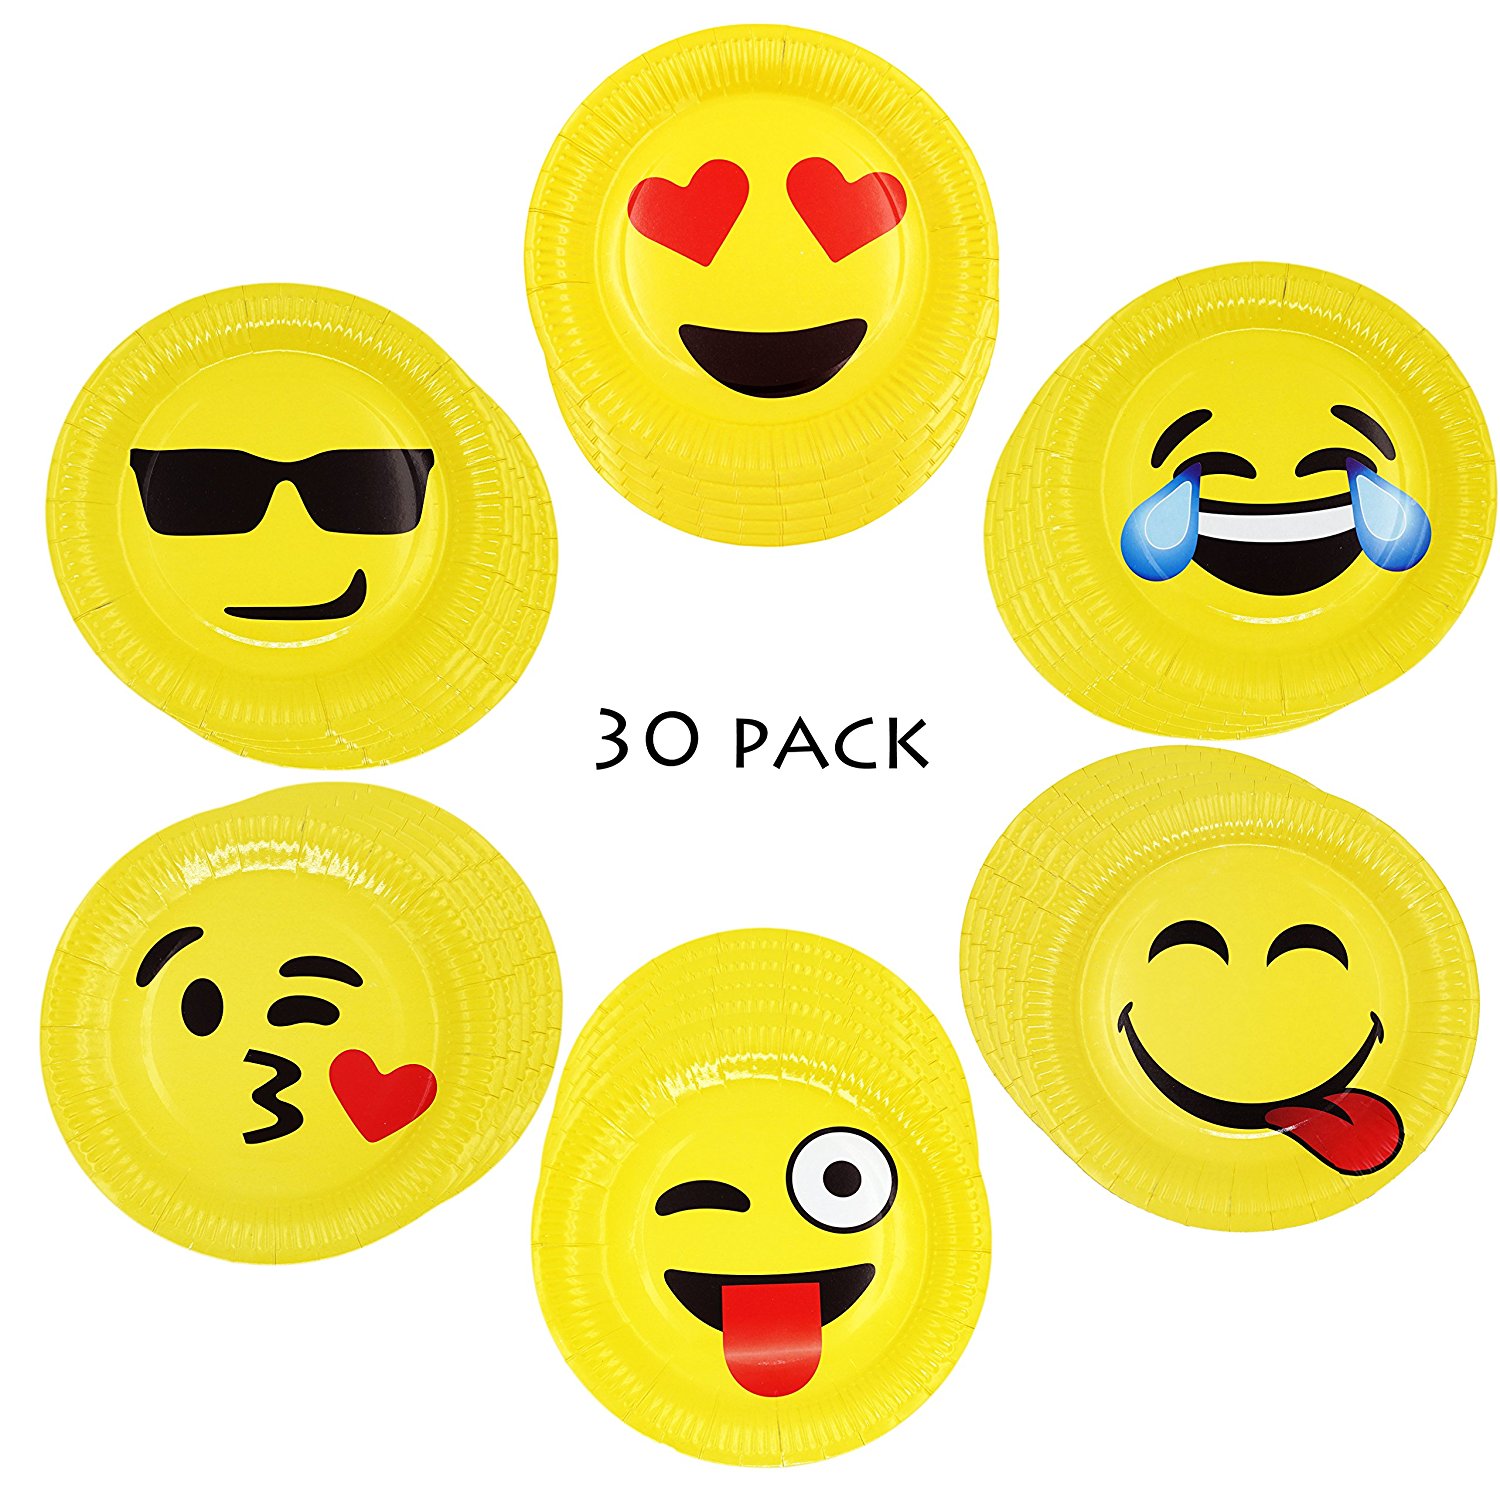 Amazon.com: Popculta 9 Inch Large Emoji Paper Party Plates Assorted ...